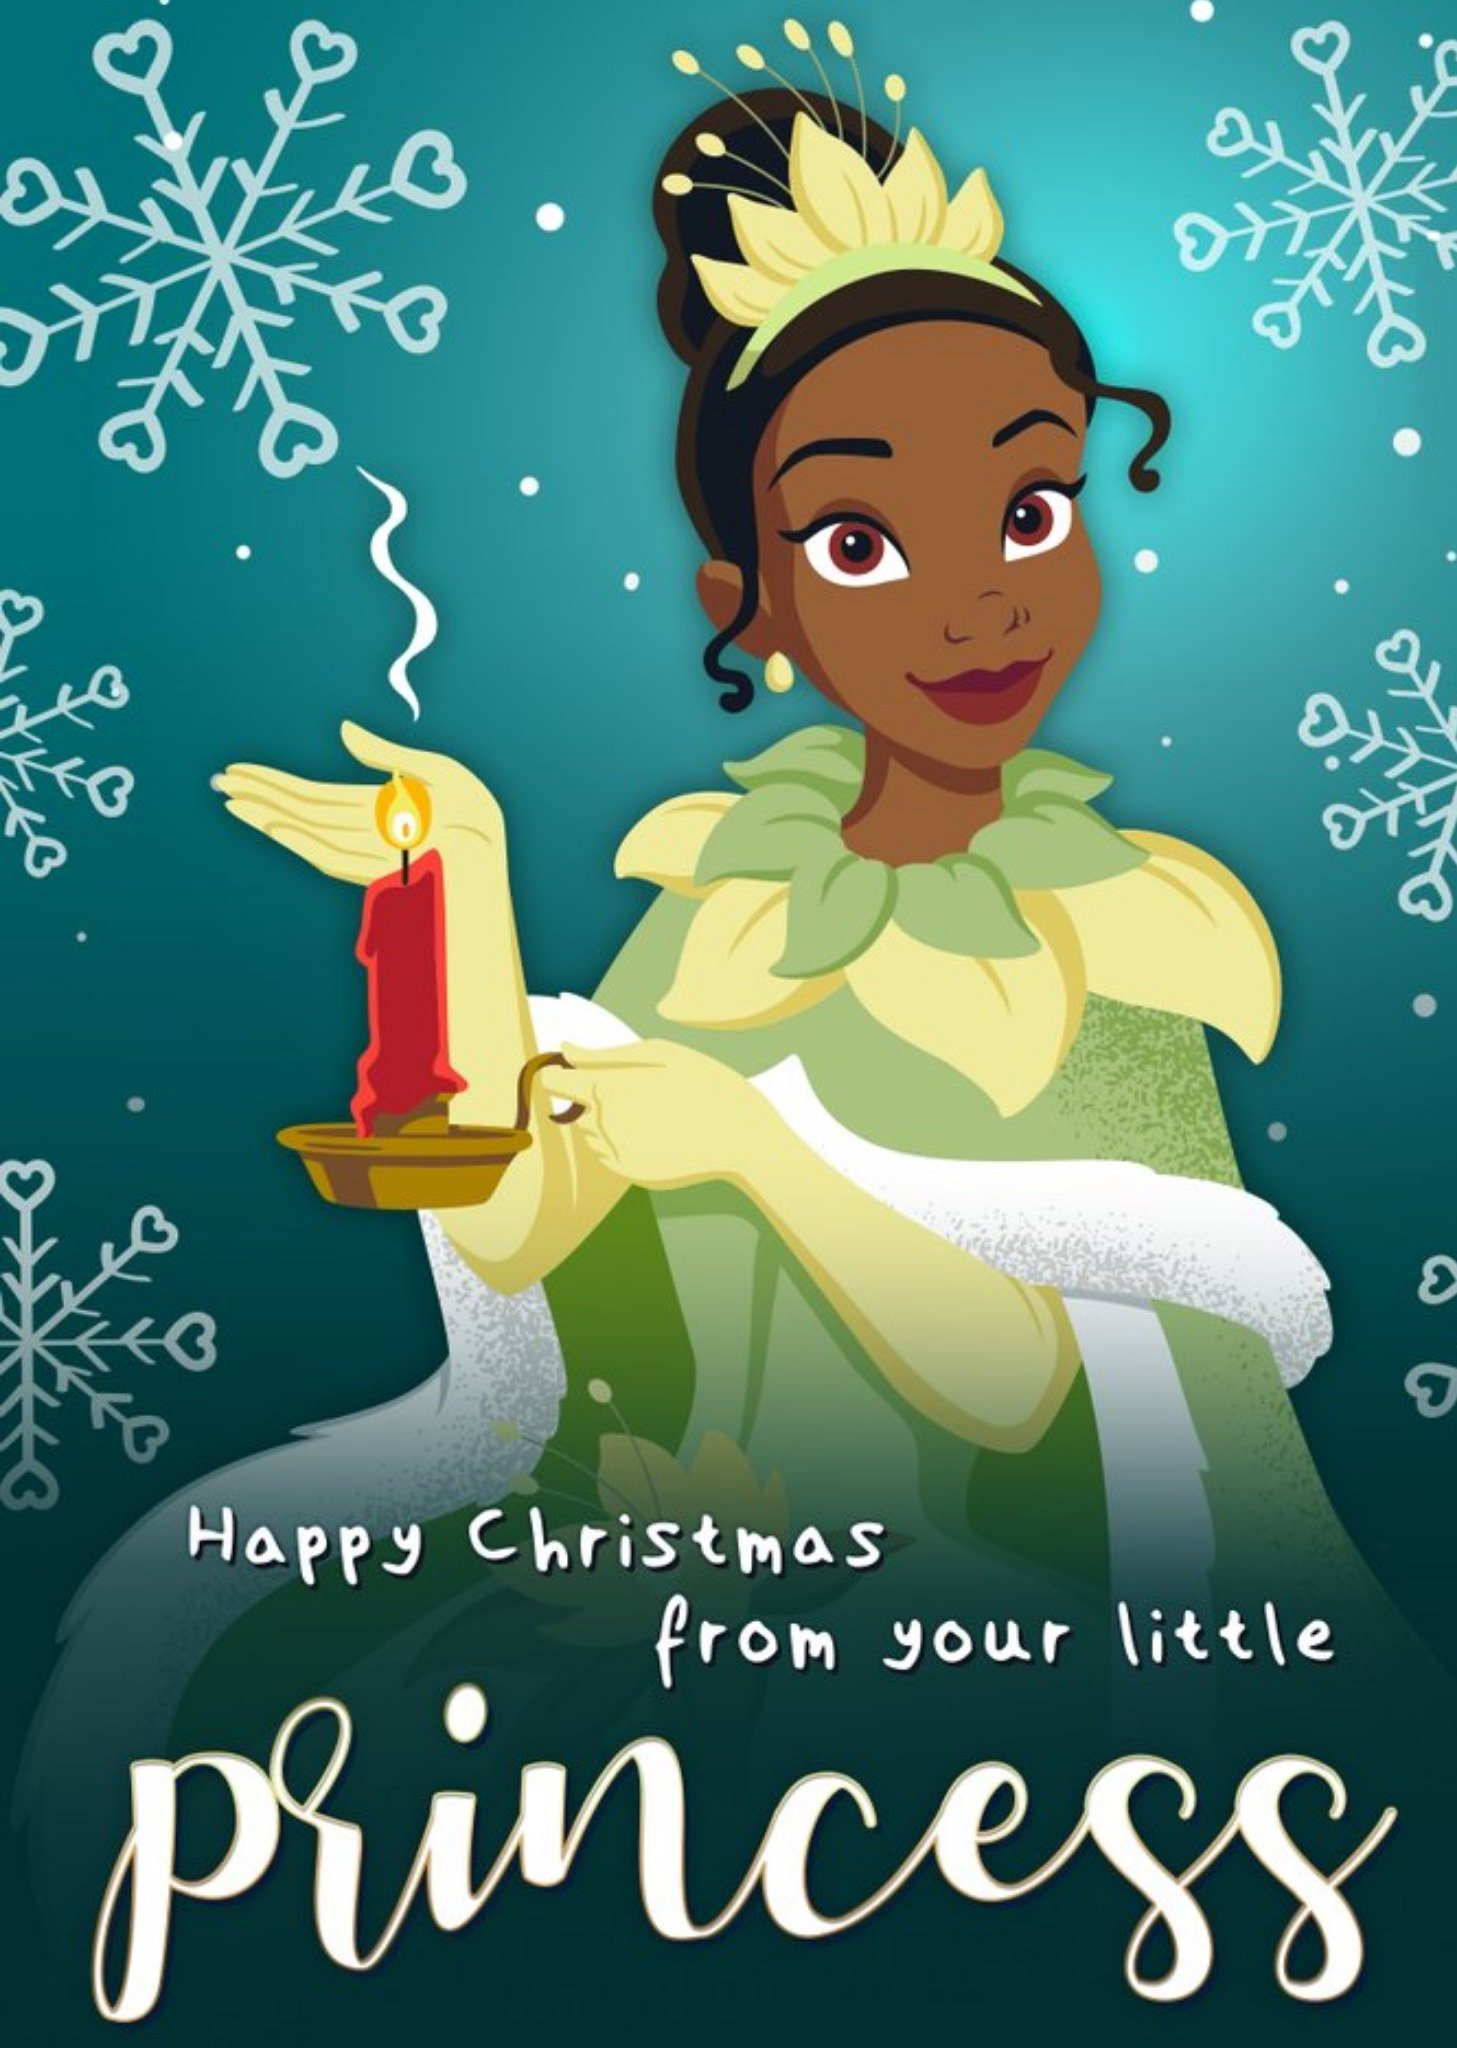 Disney Princesses Disney Tiana From Your Little Princess Christmas Card Ecard